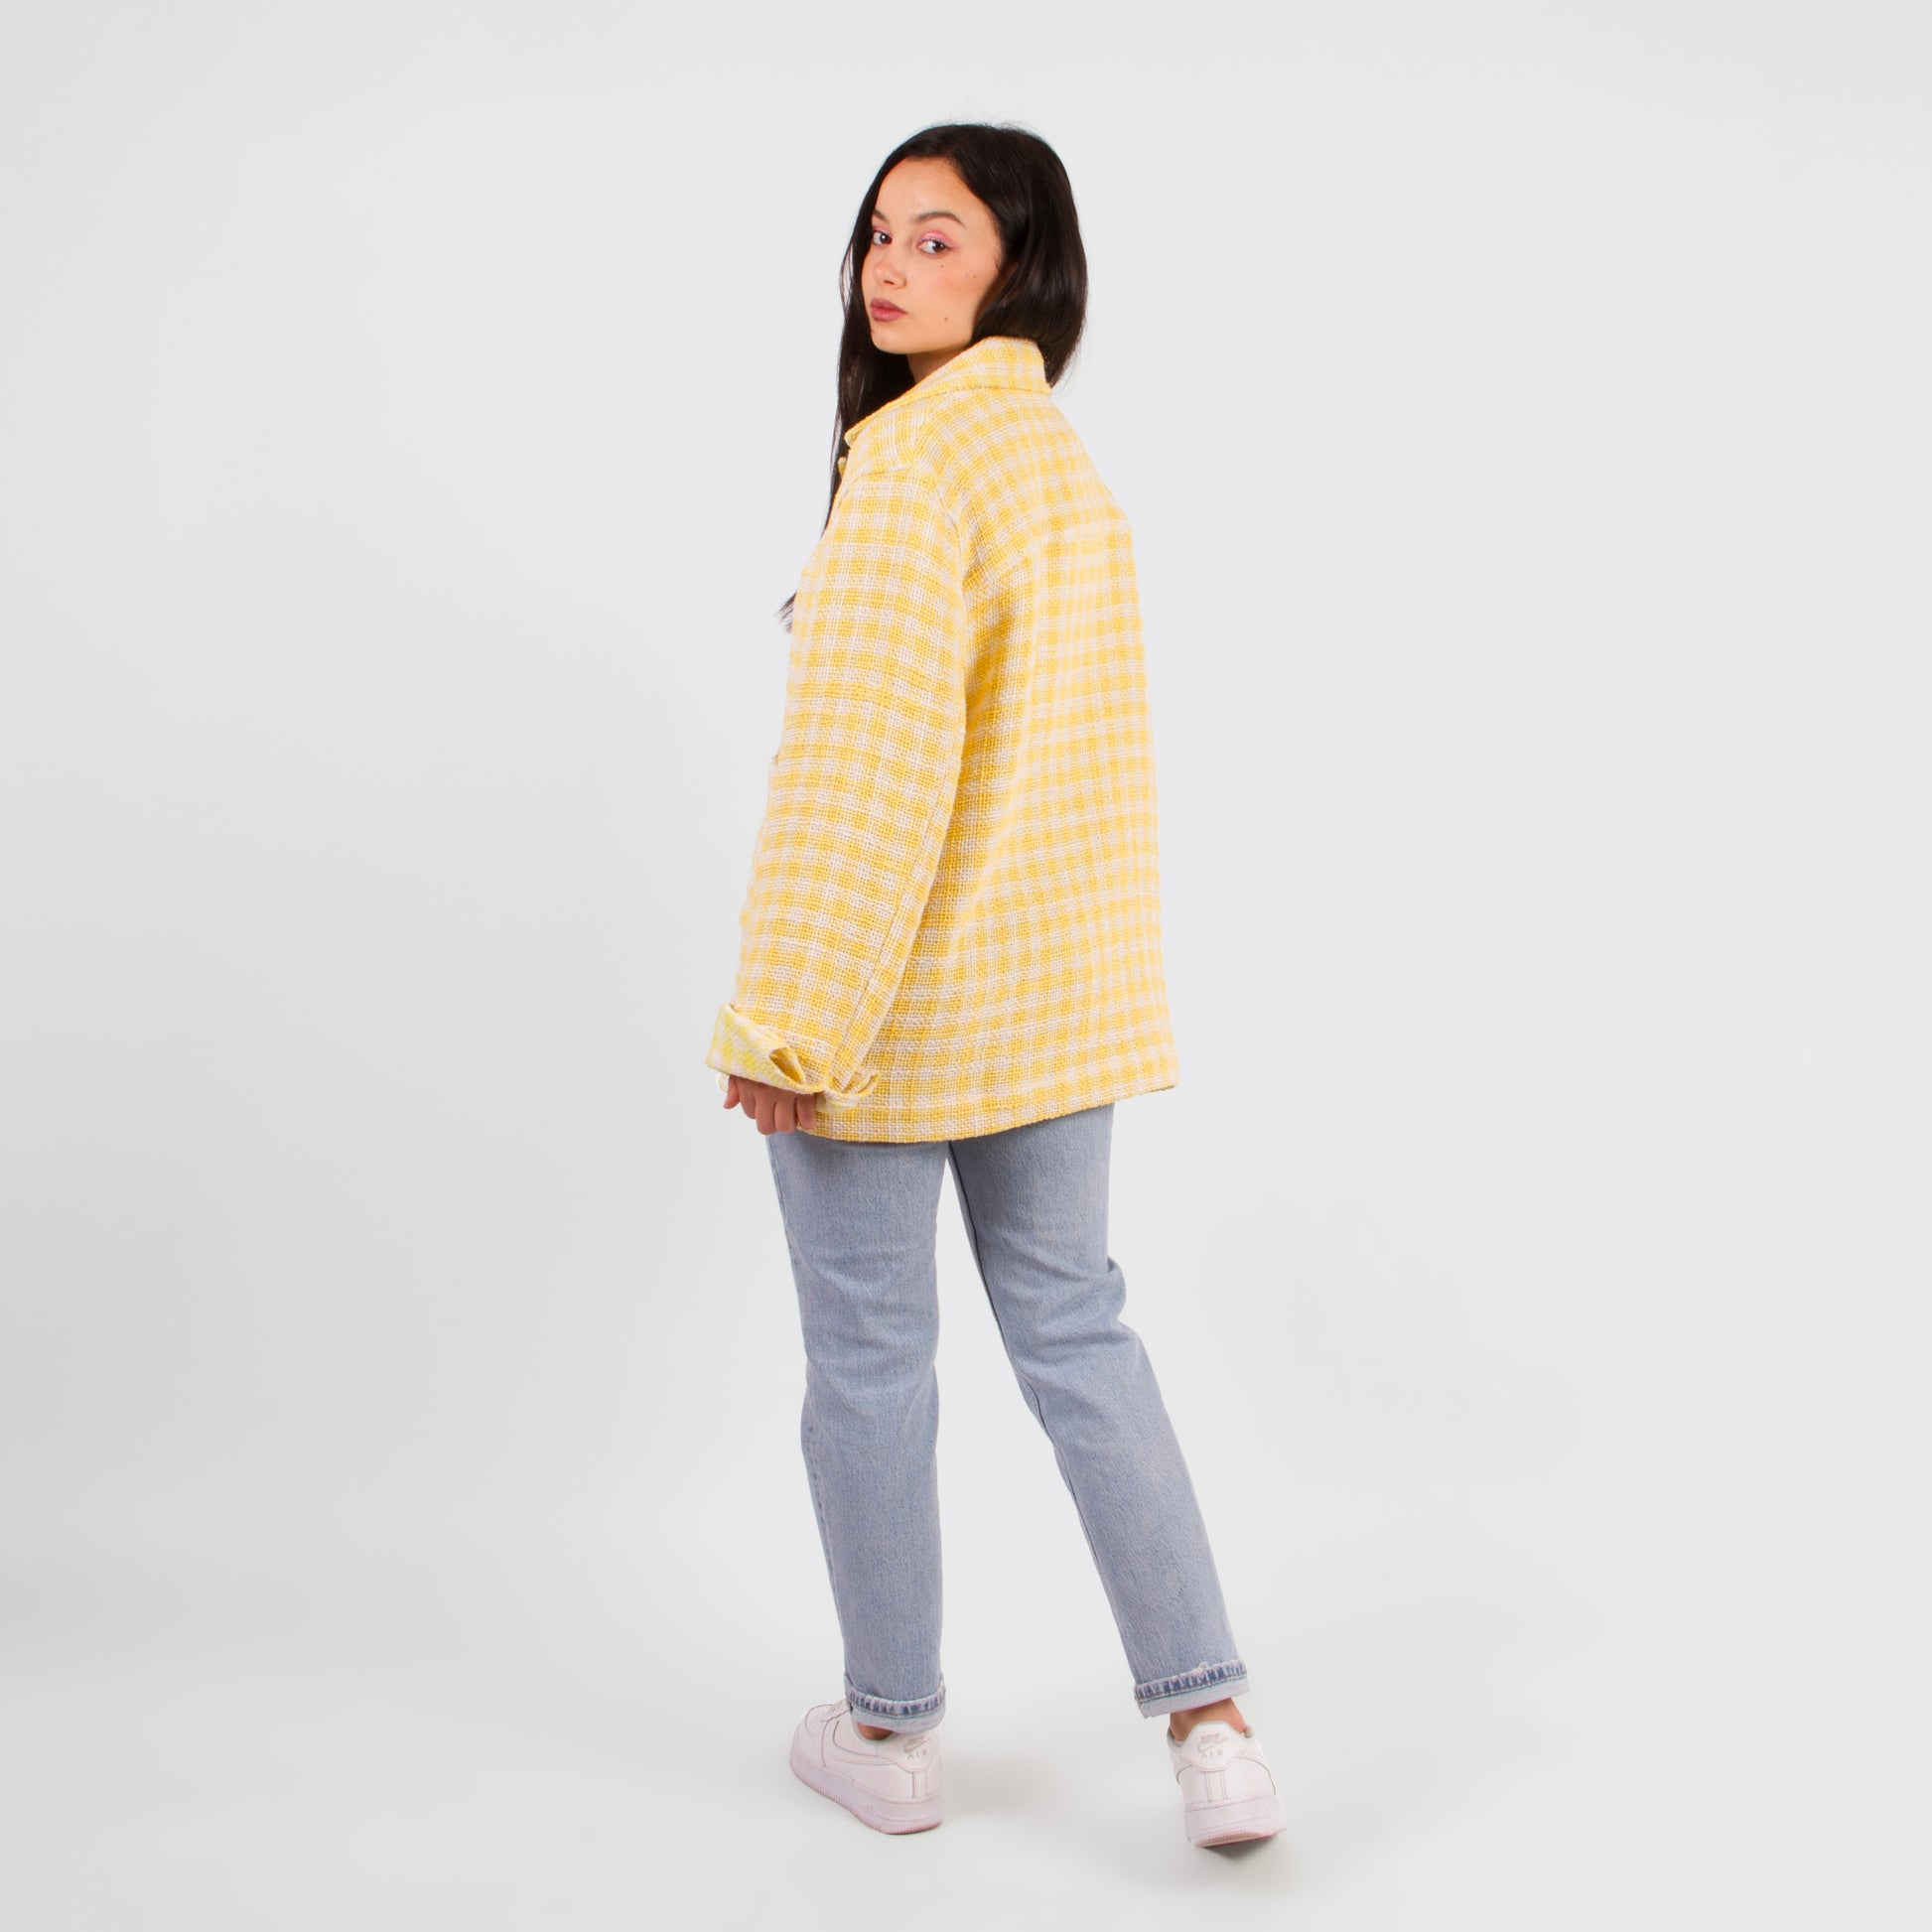 lucewear: femme portant une veste jaune à carreau